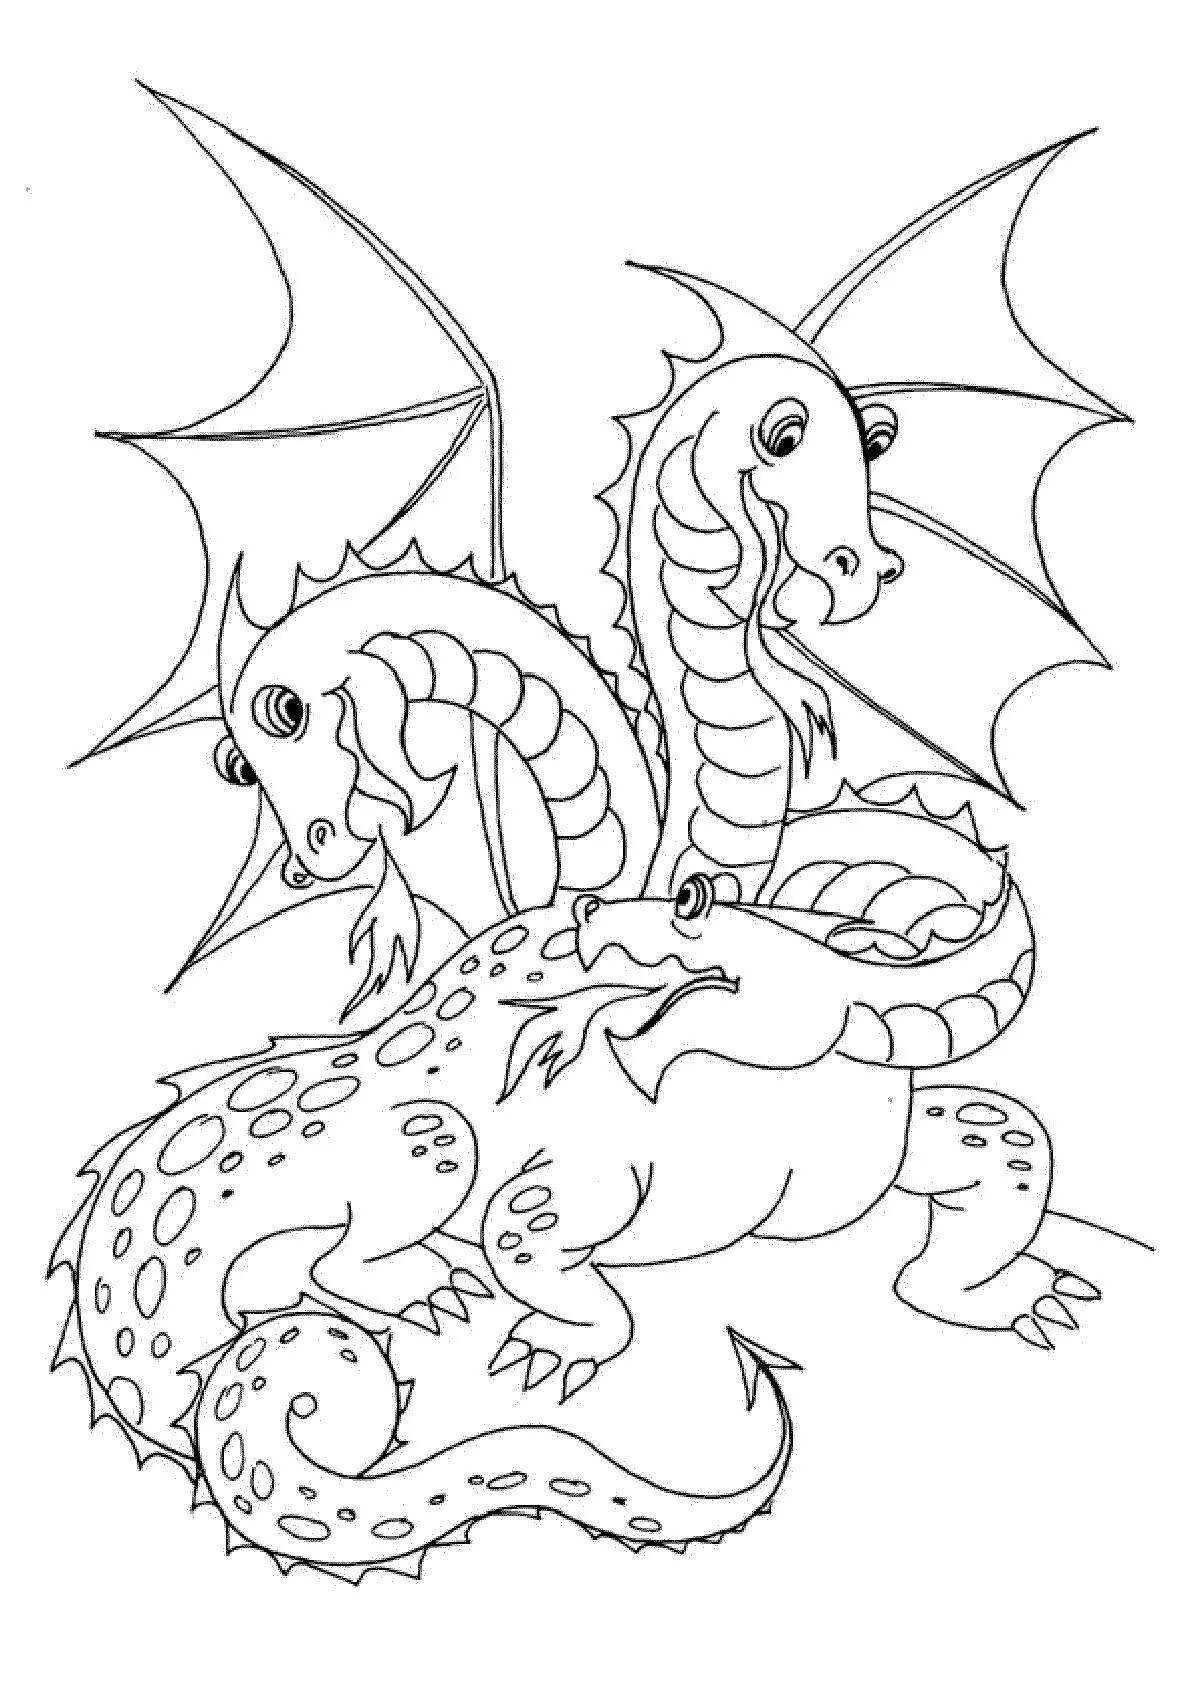 Coloring mystical three-headed dragon